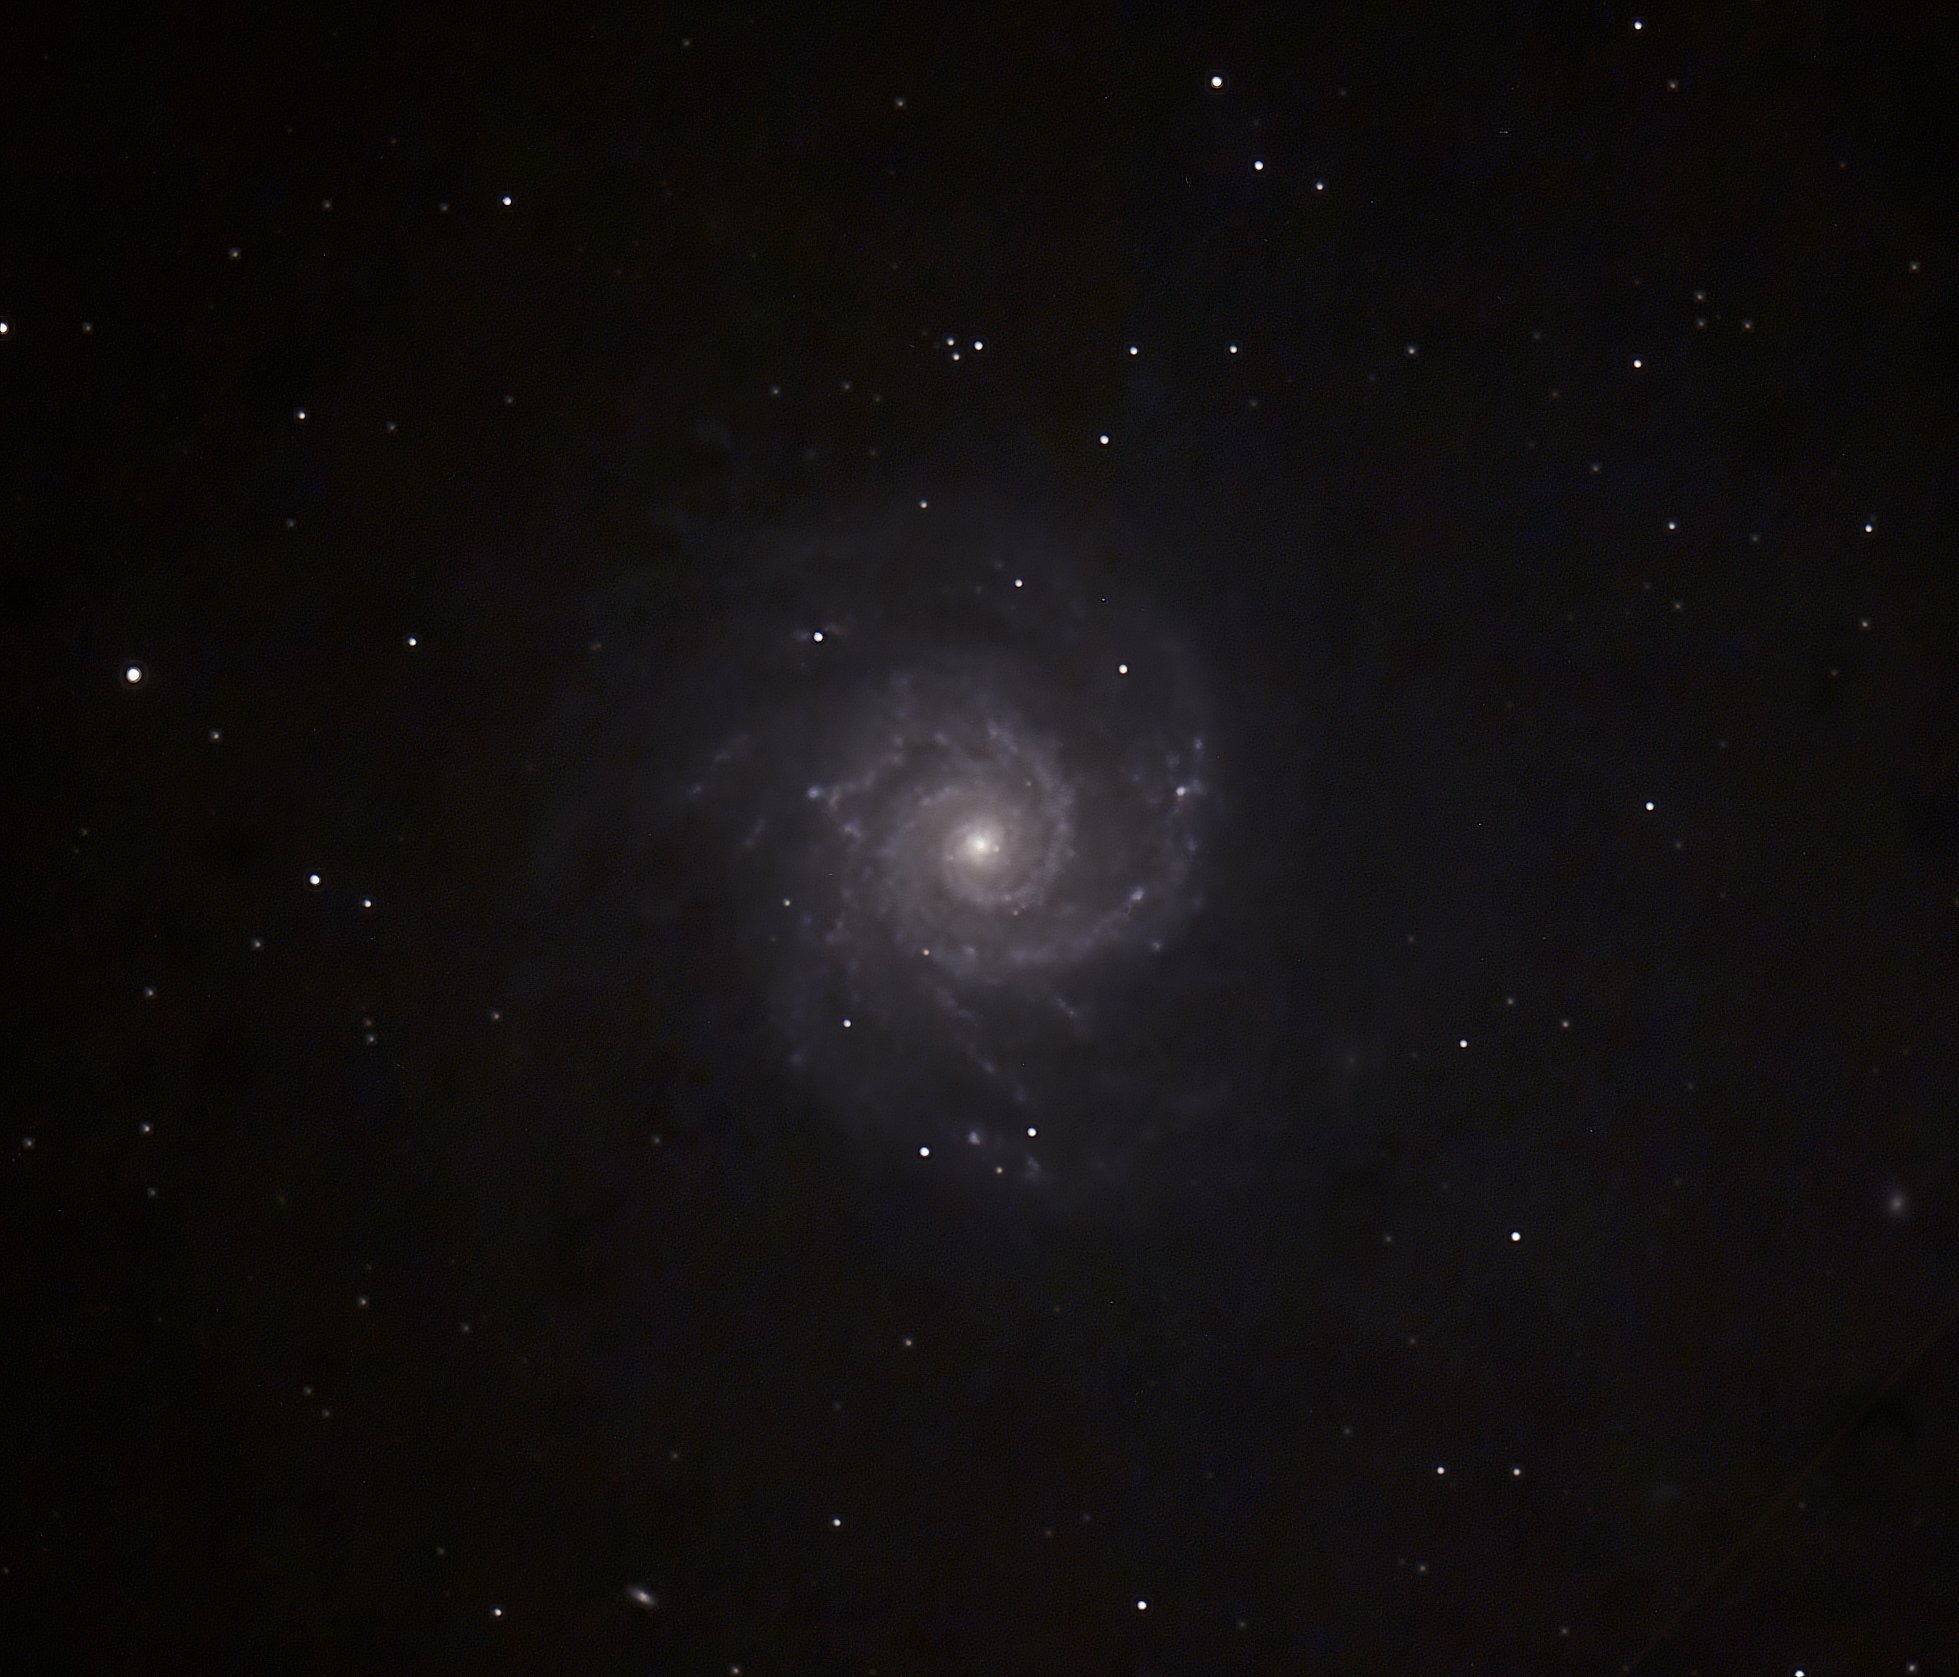 The spiral galaxy M74